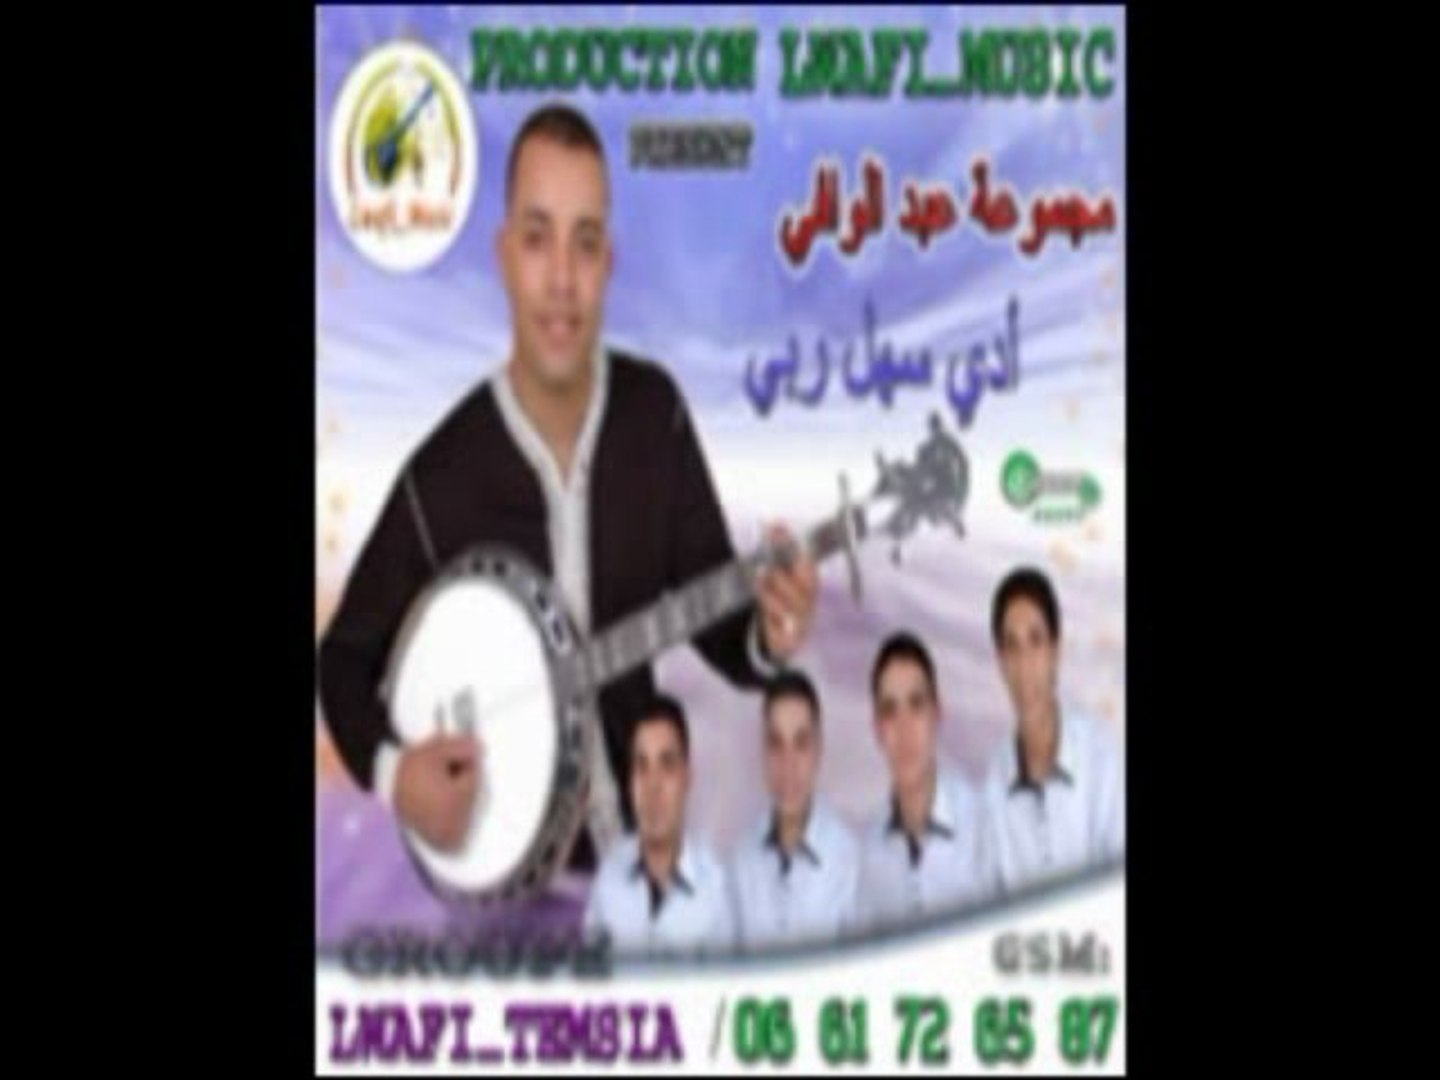 MP3 Group Lwafi - Vidéo Dailymotion